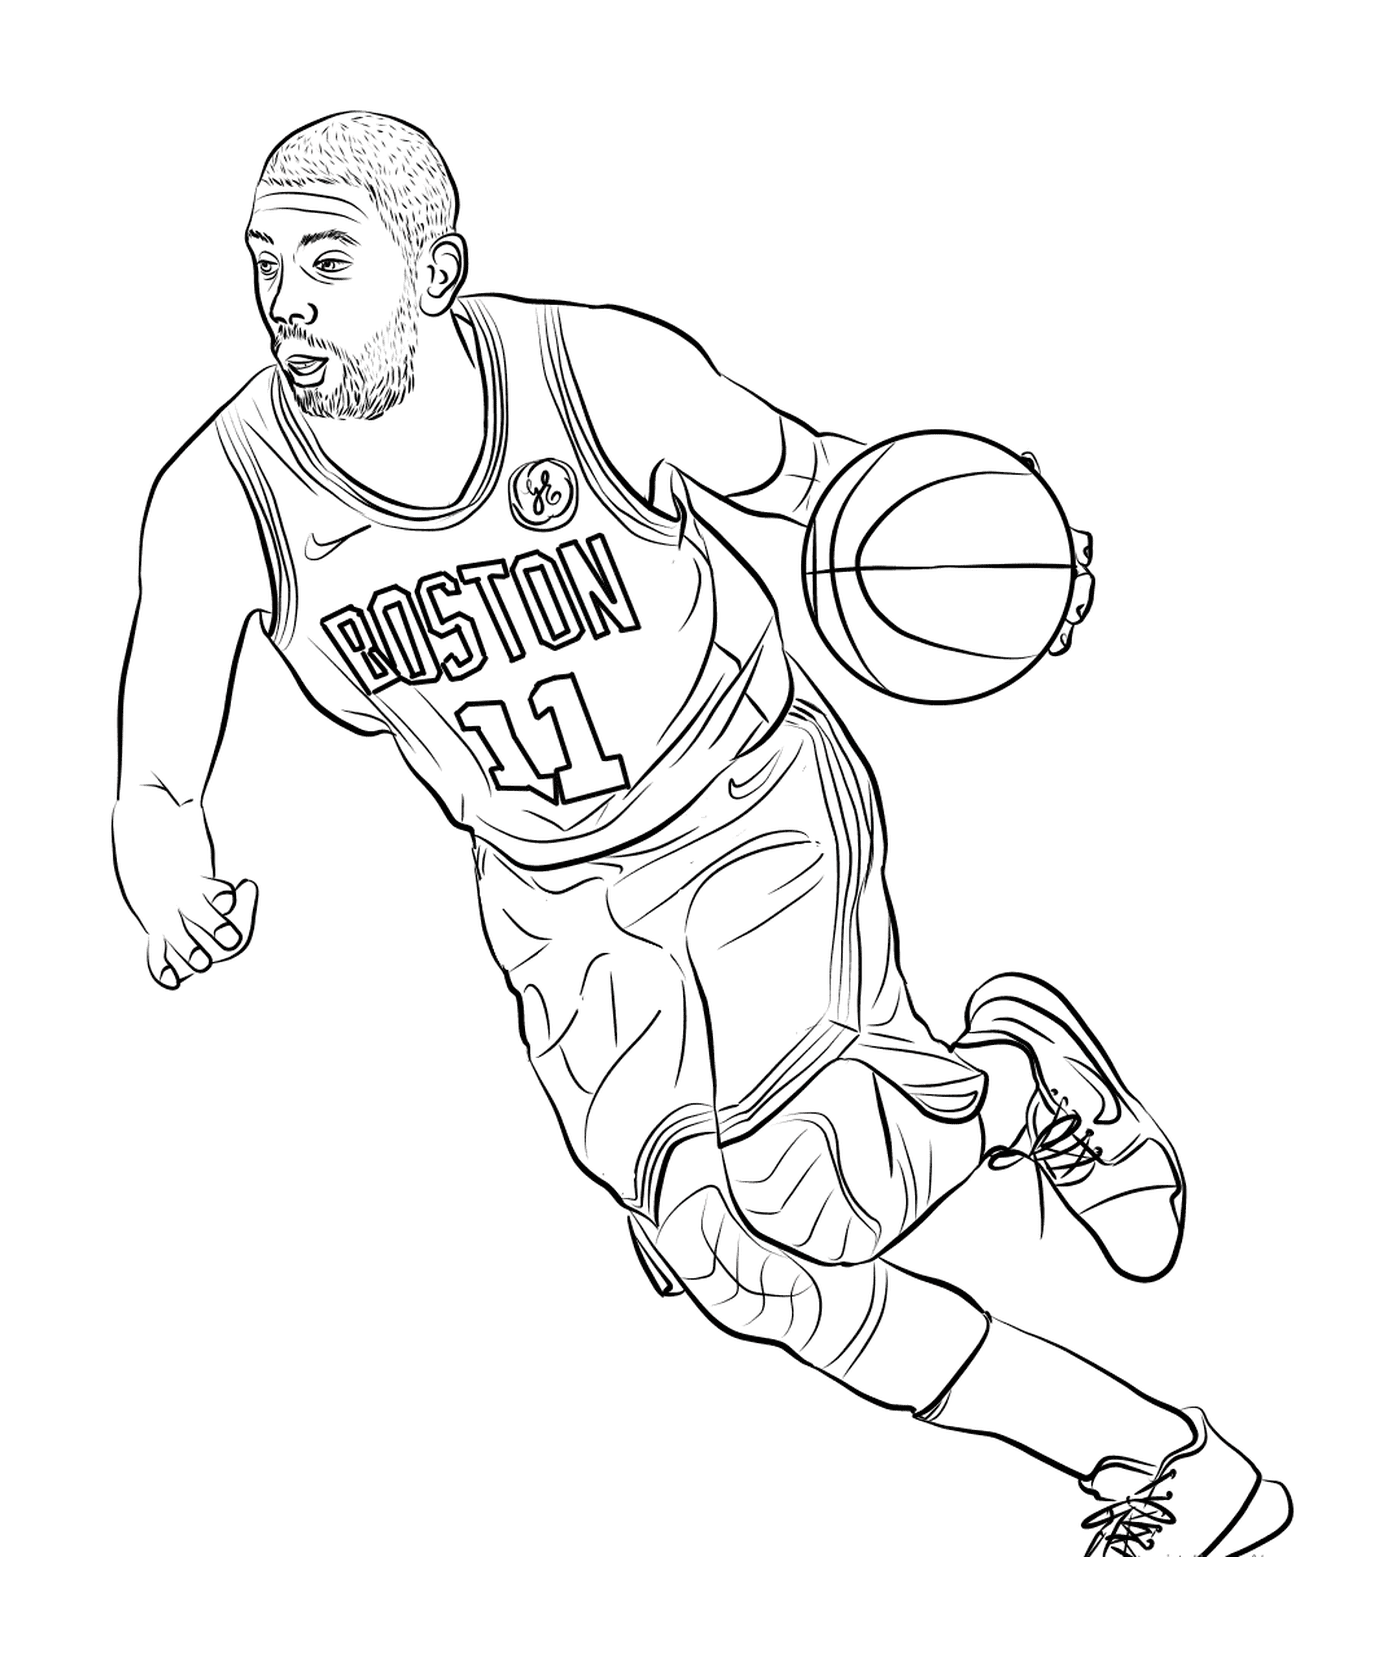  Kyrie Irving spielt Basketball 